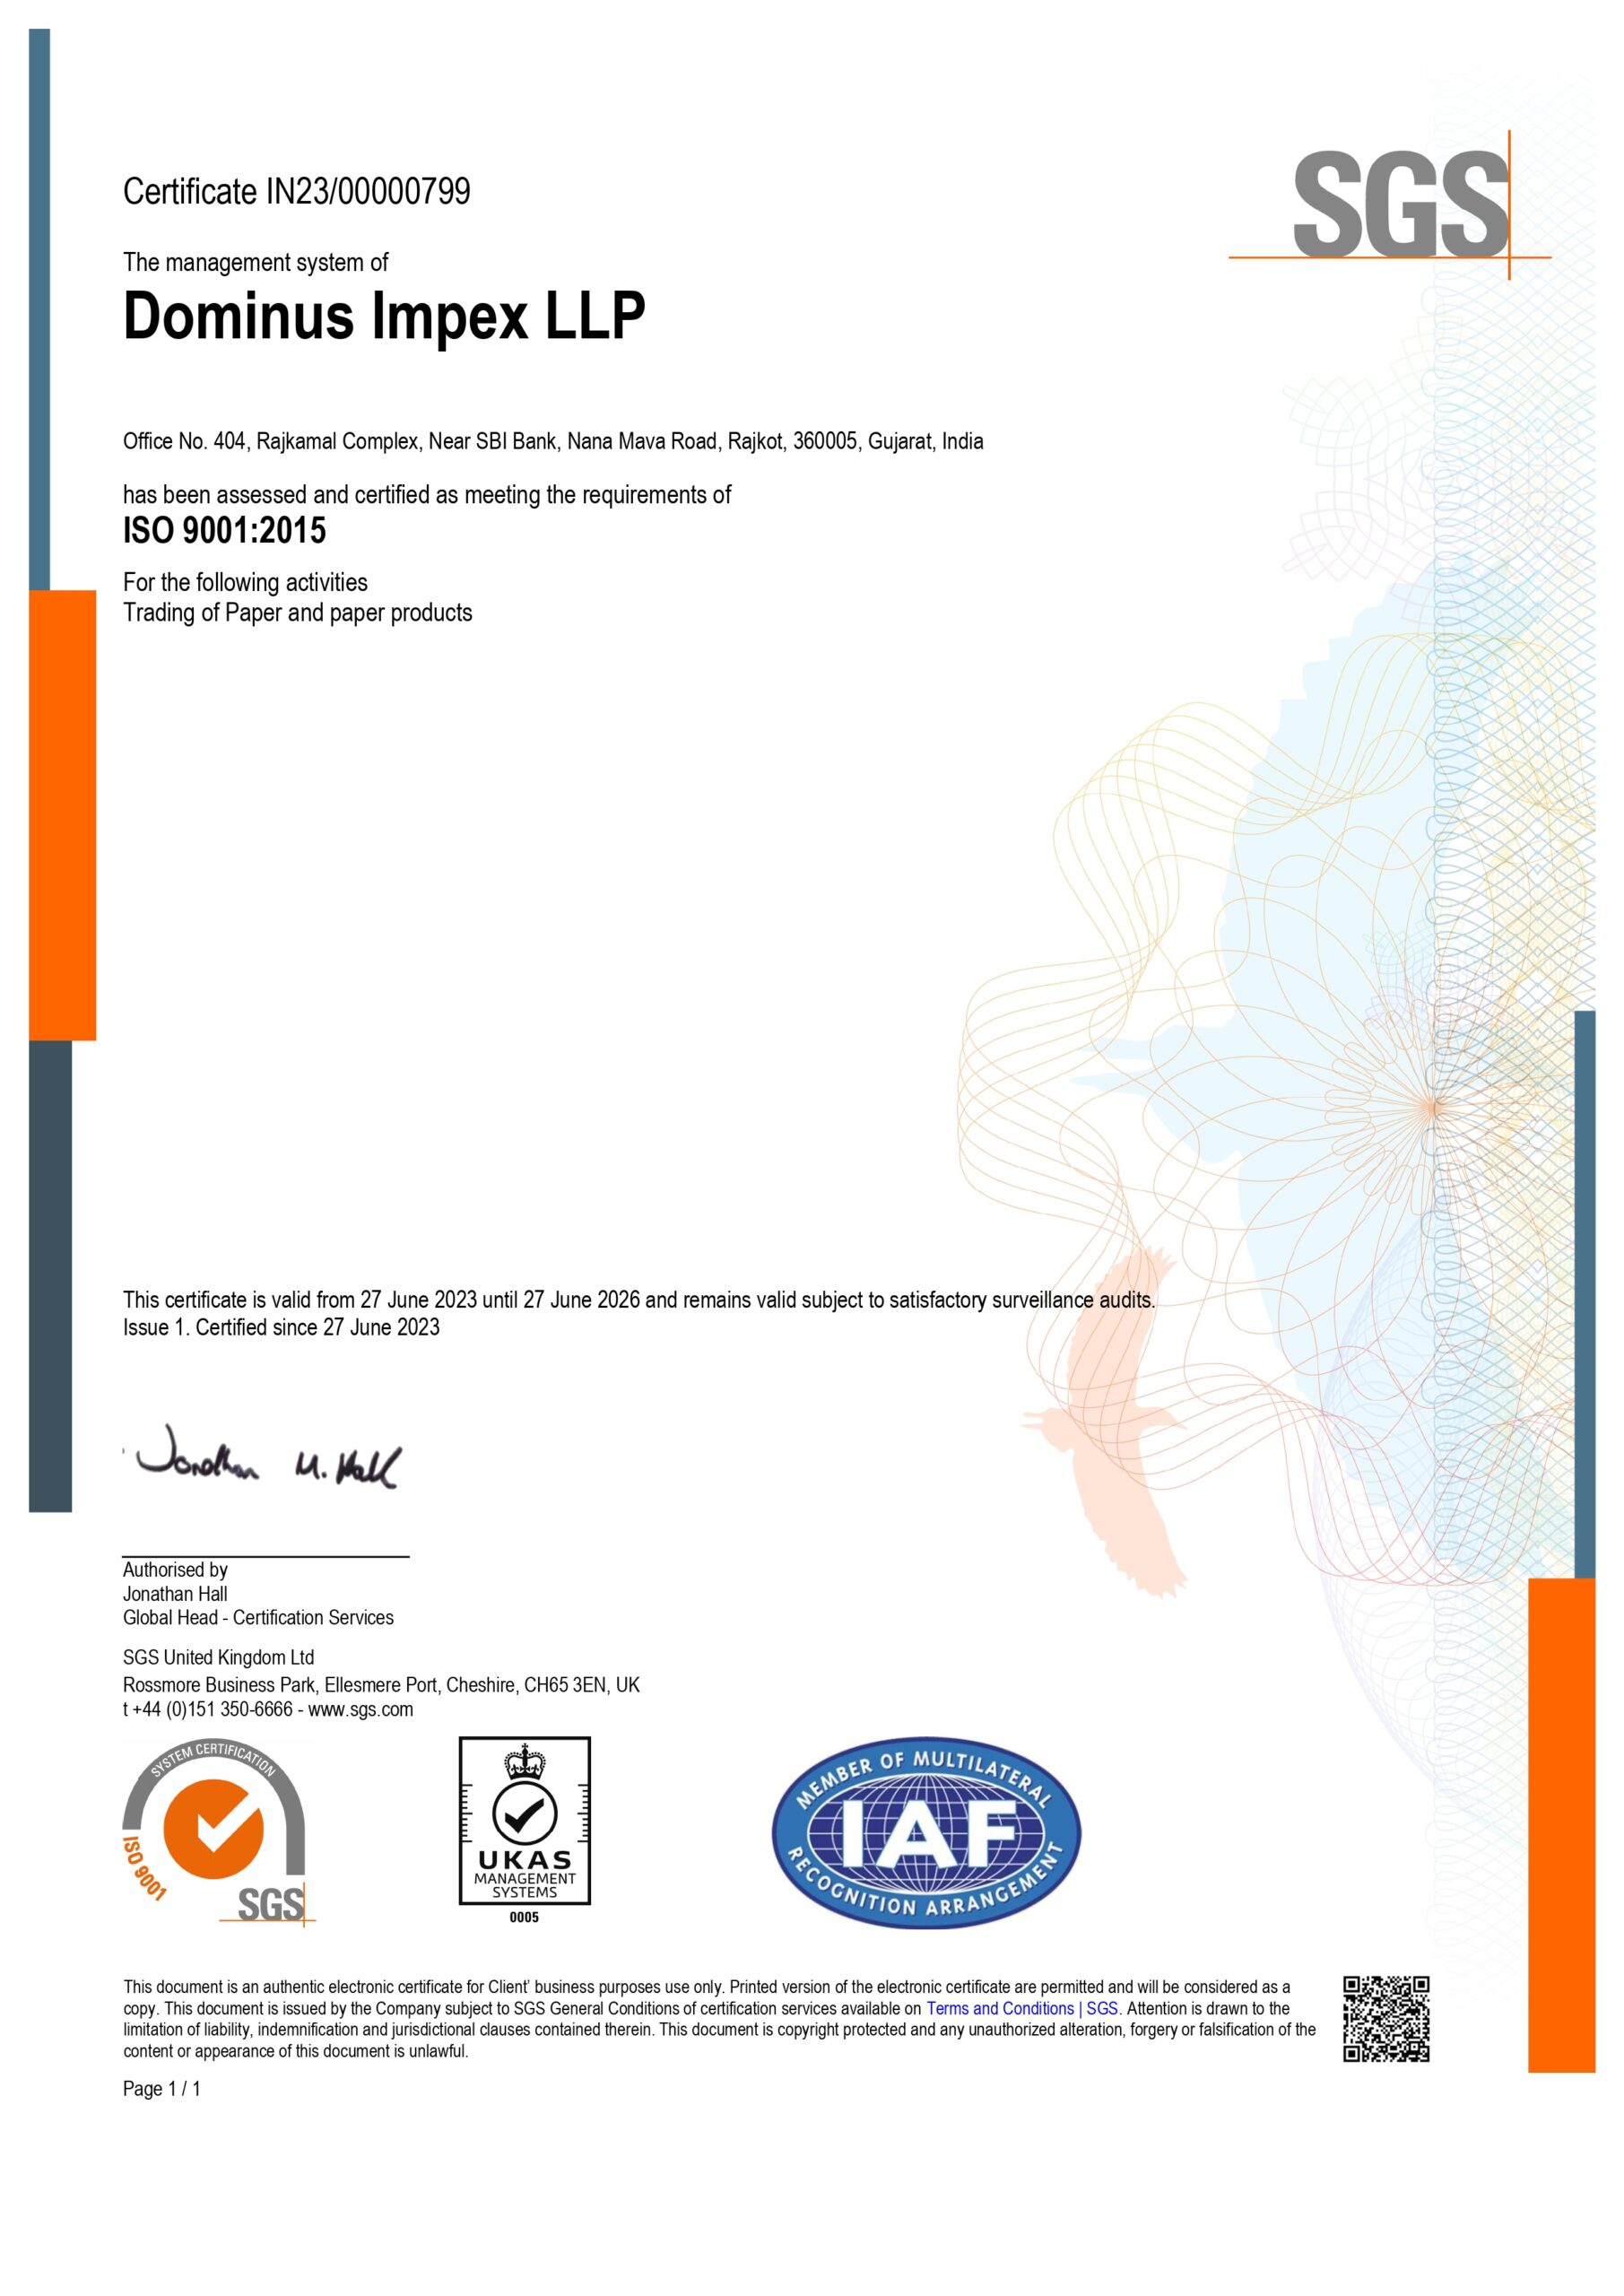 Dominus-ISO-9001-Certificate